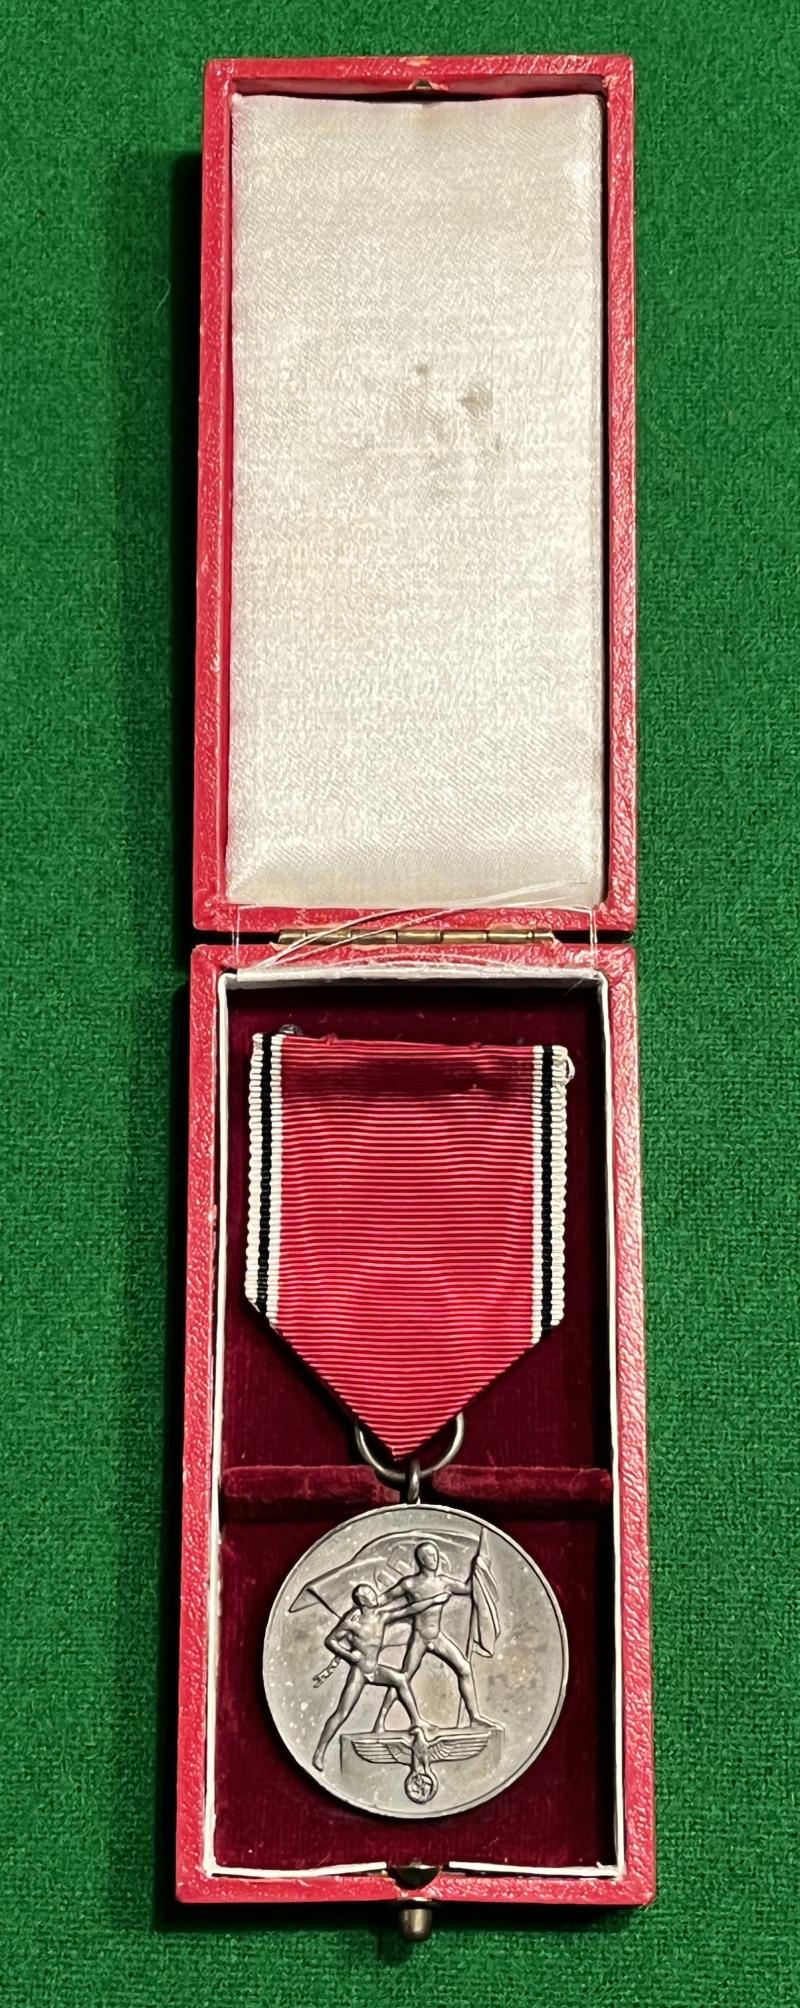 Cased Anschluss Commemorative Medal.